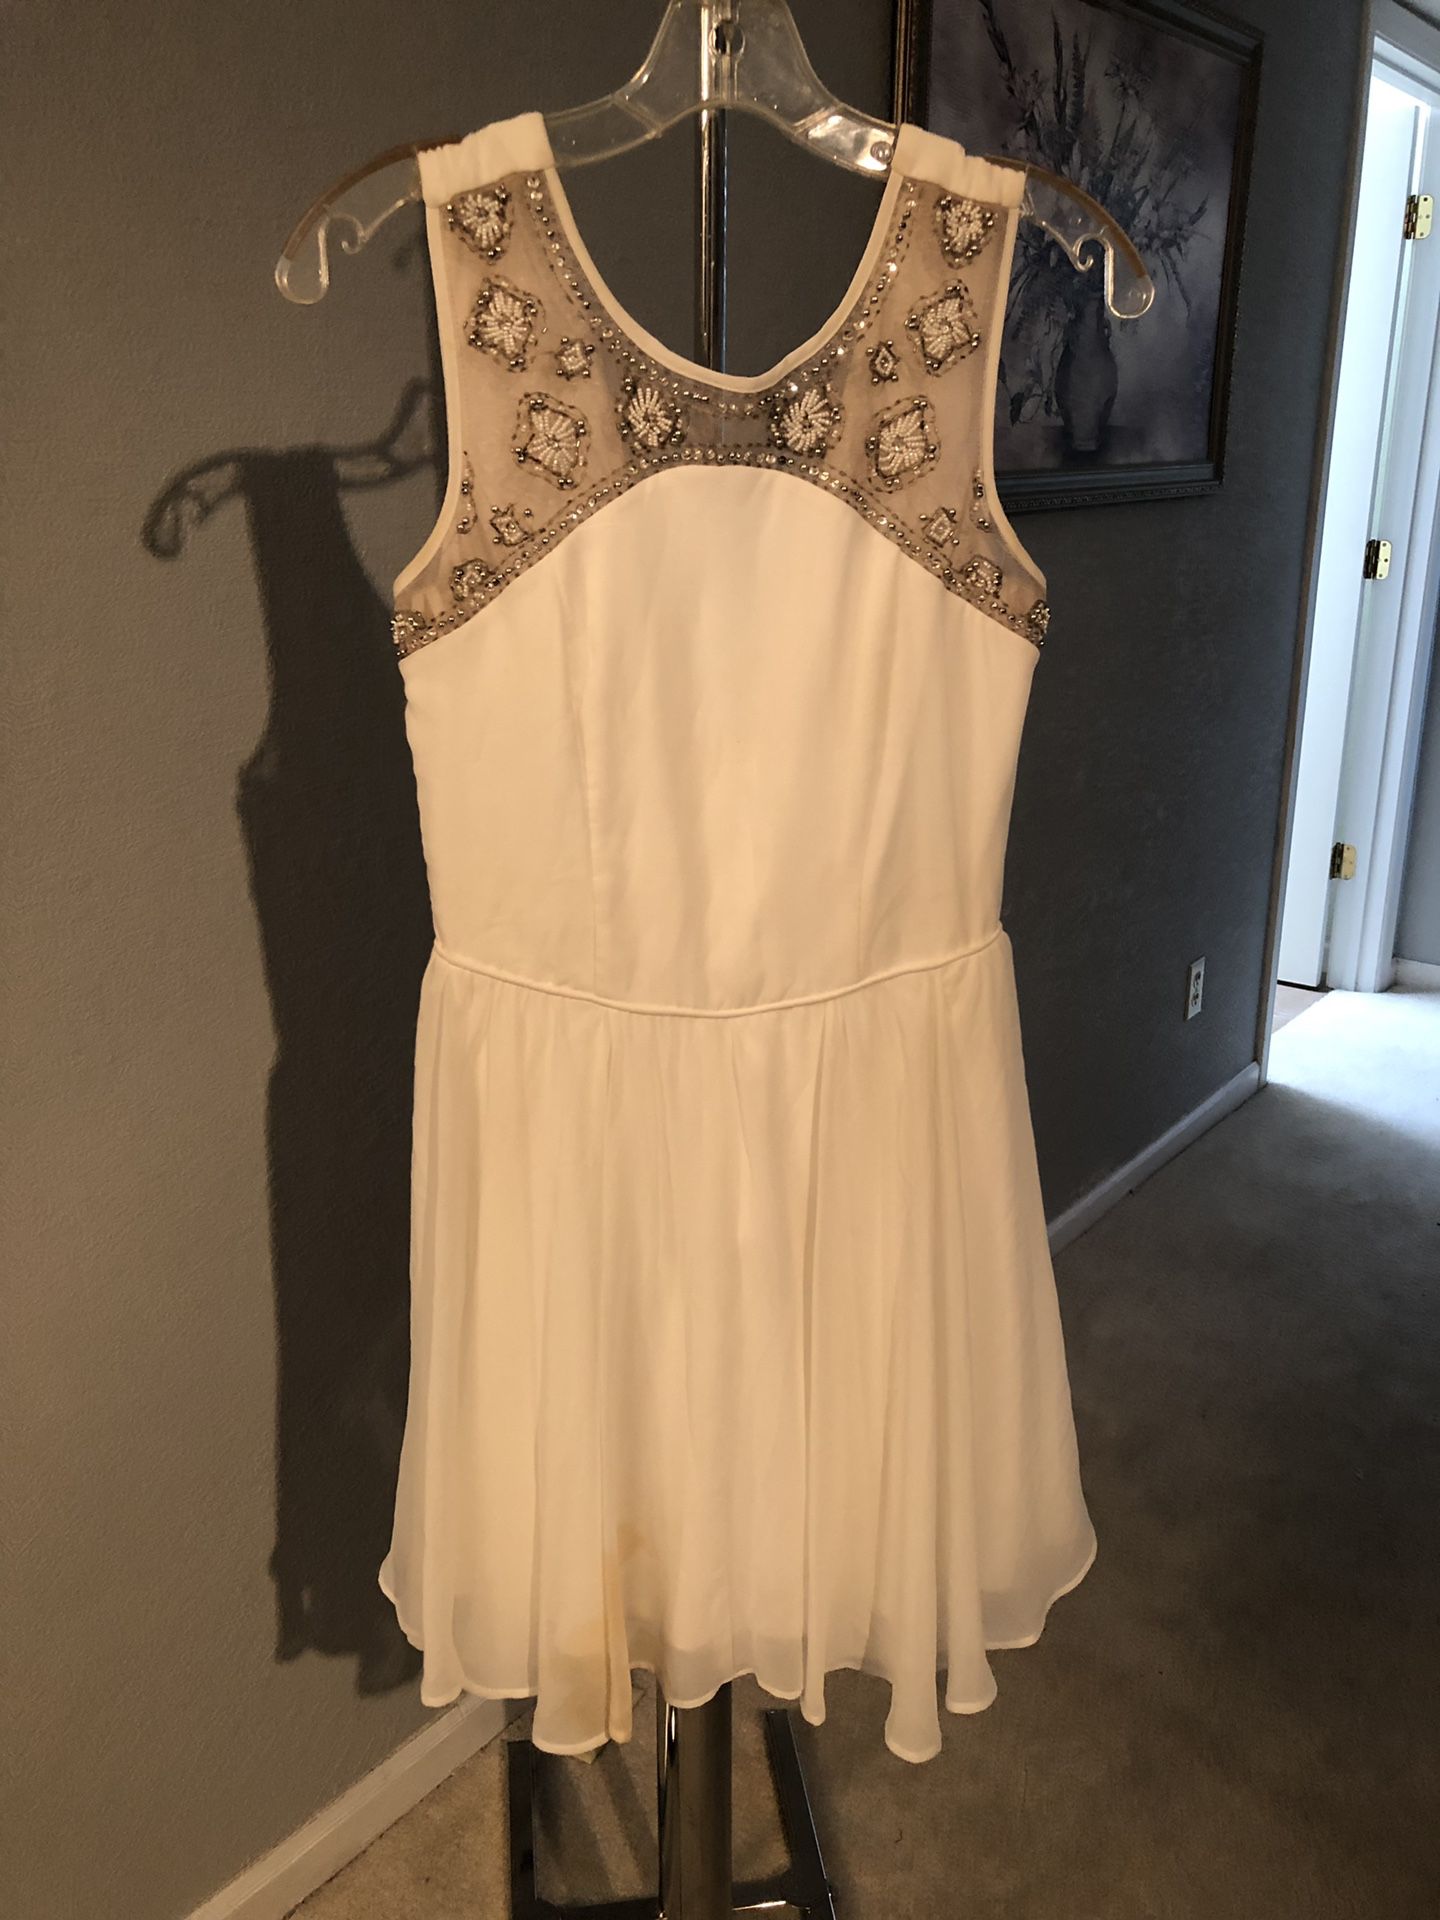 Beaded white dress, size 3